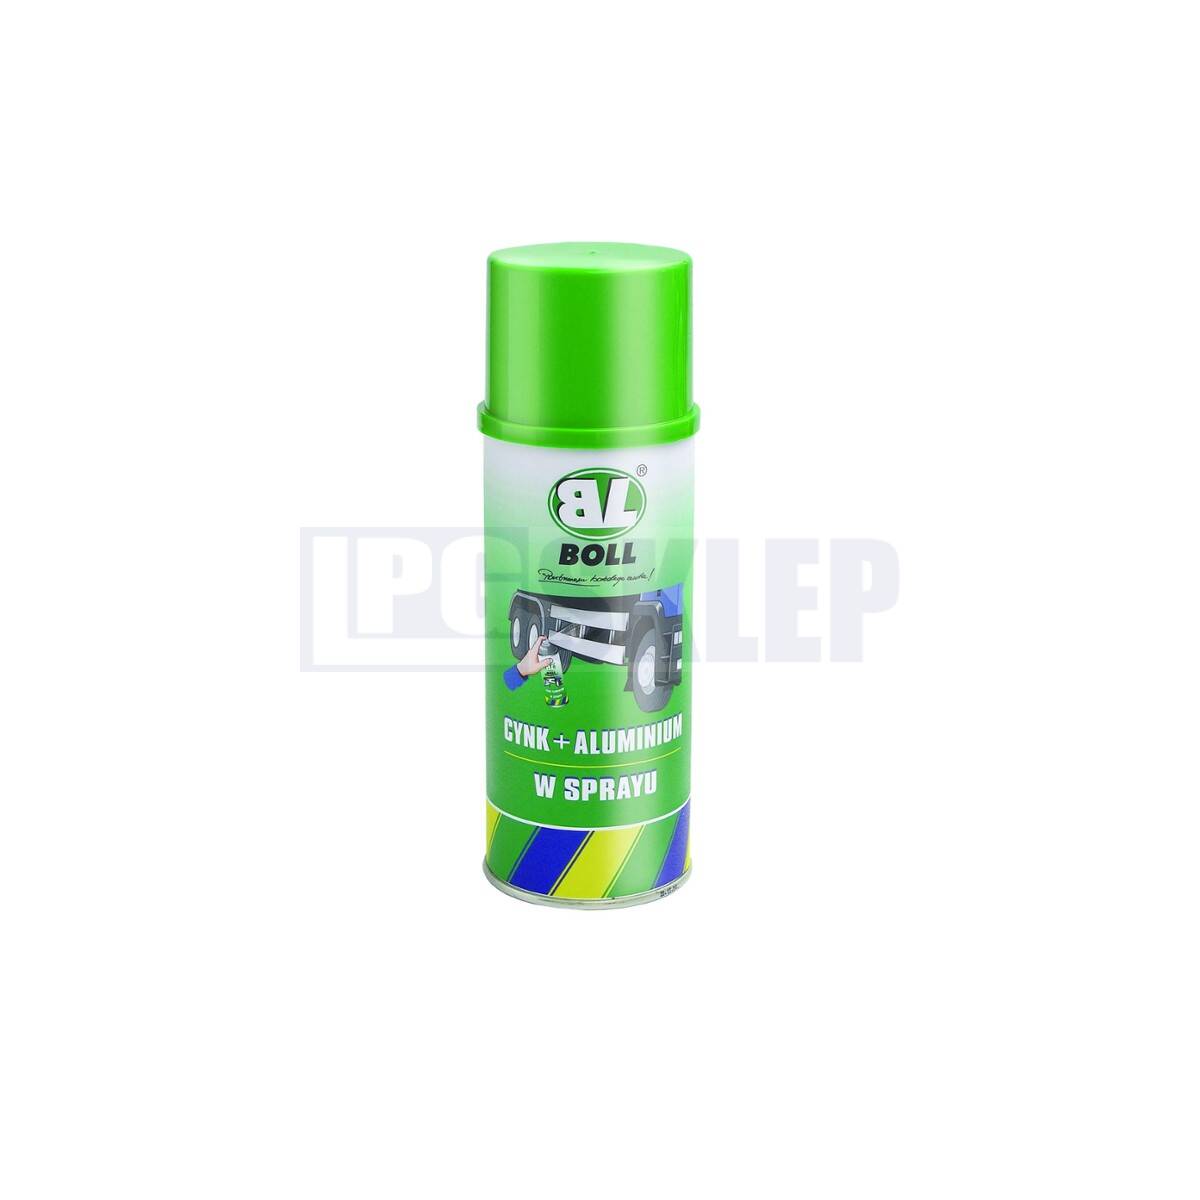 BOLL Cynk + aluminium - spray 400 ml (Foto 1)